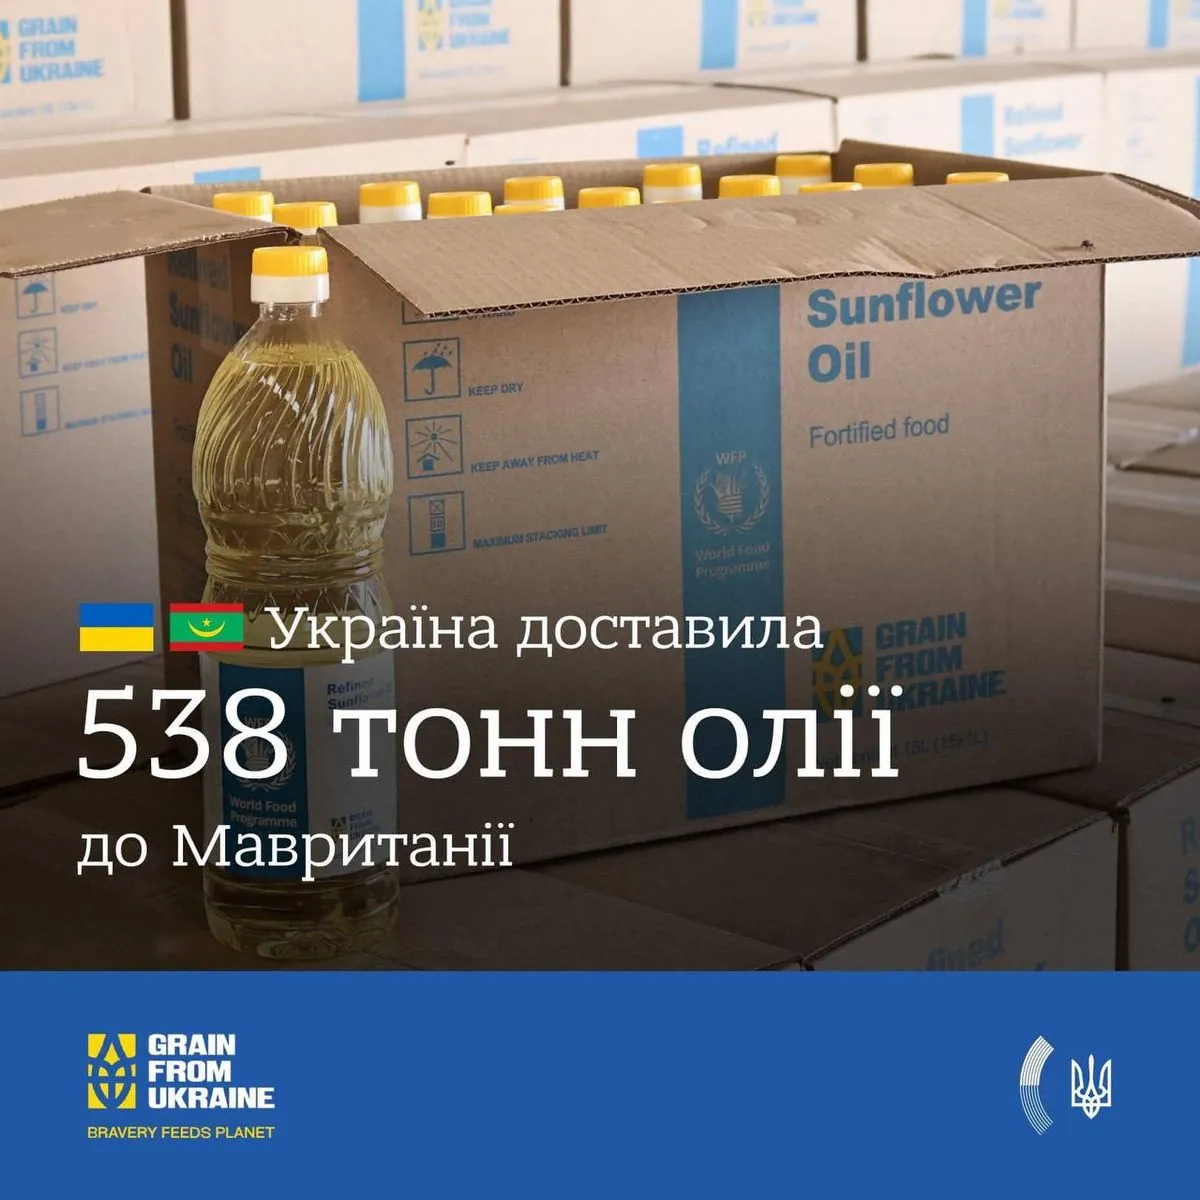 Grain from Ukraine: Ukraine supplies 538 tons of oil to Mauritania